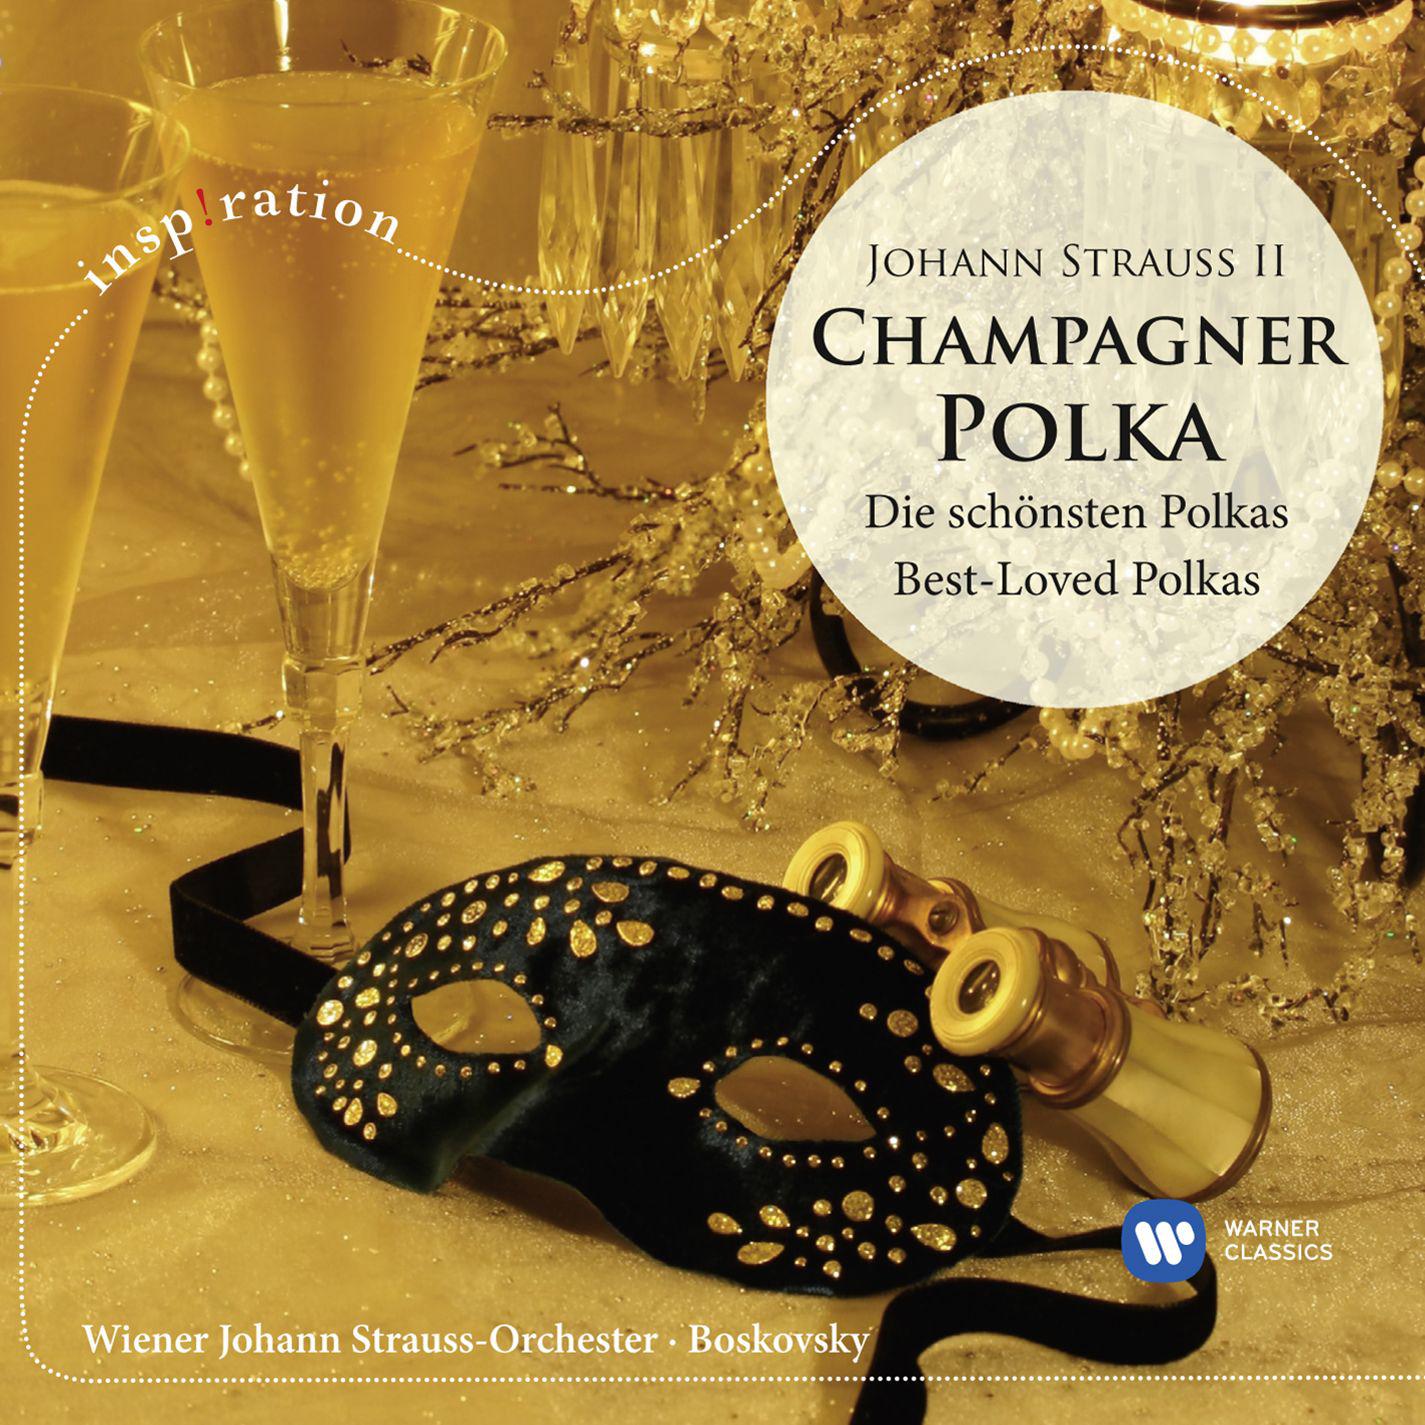 Strauss II: Champagner Polka  Die sch nsten Polkas  Best Loved Polkas